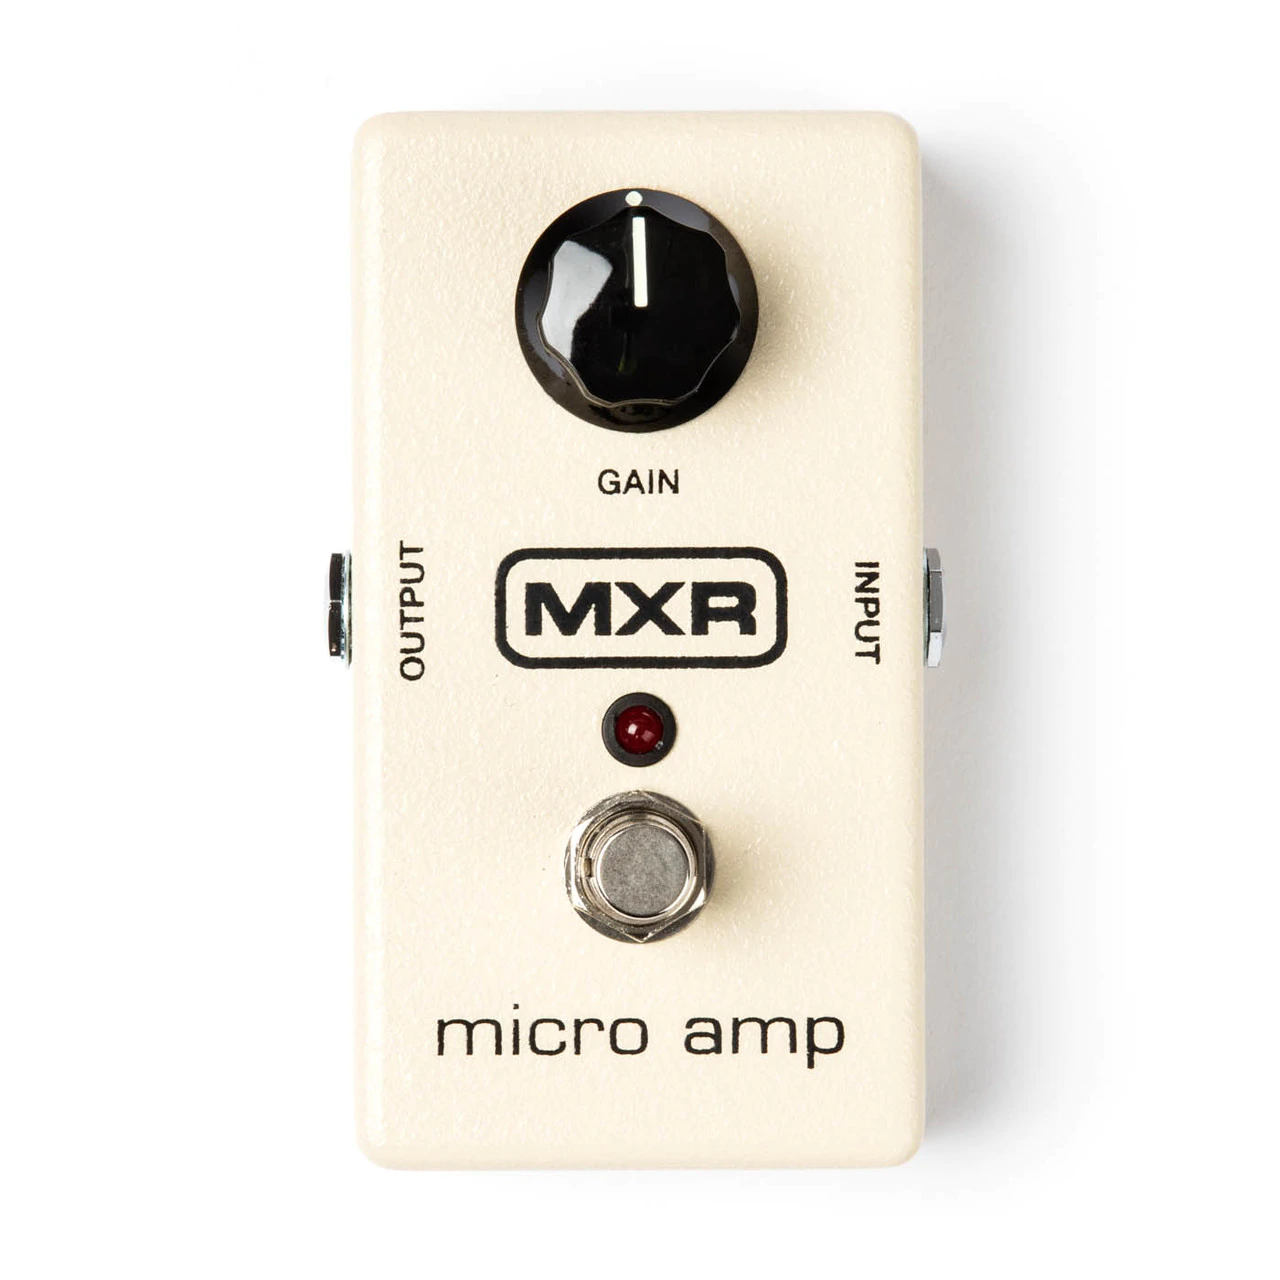 MXR M133 Micro Amp Pedal Gain Boost Effect